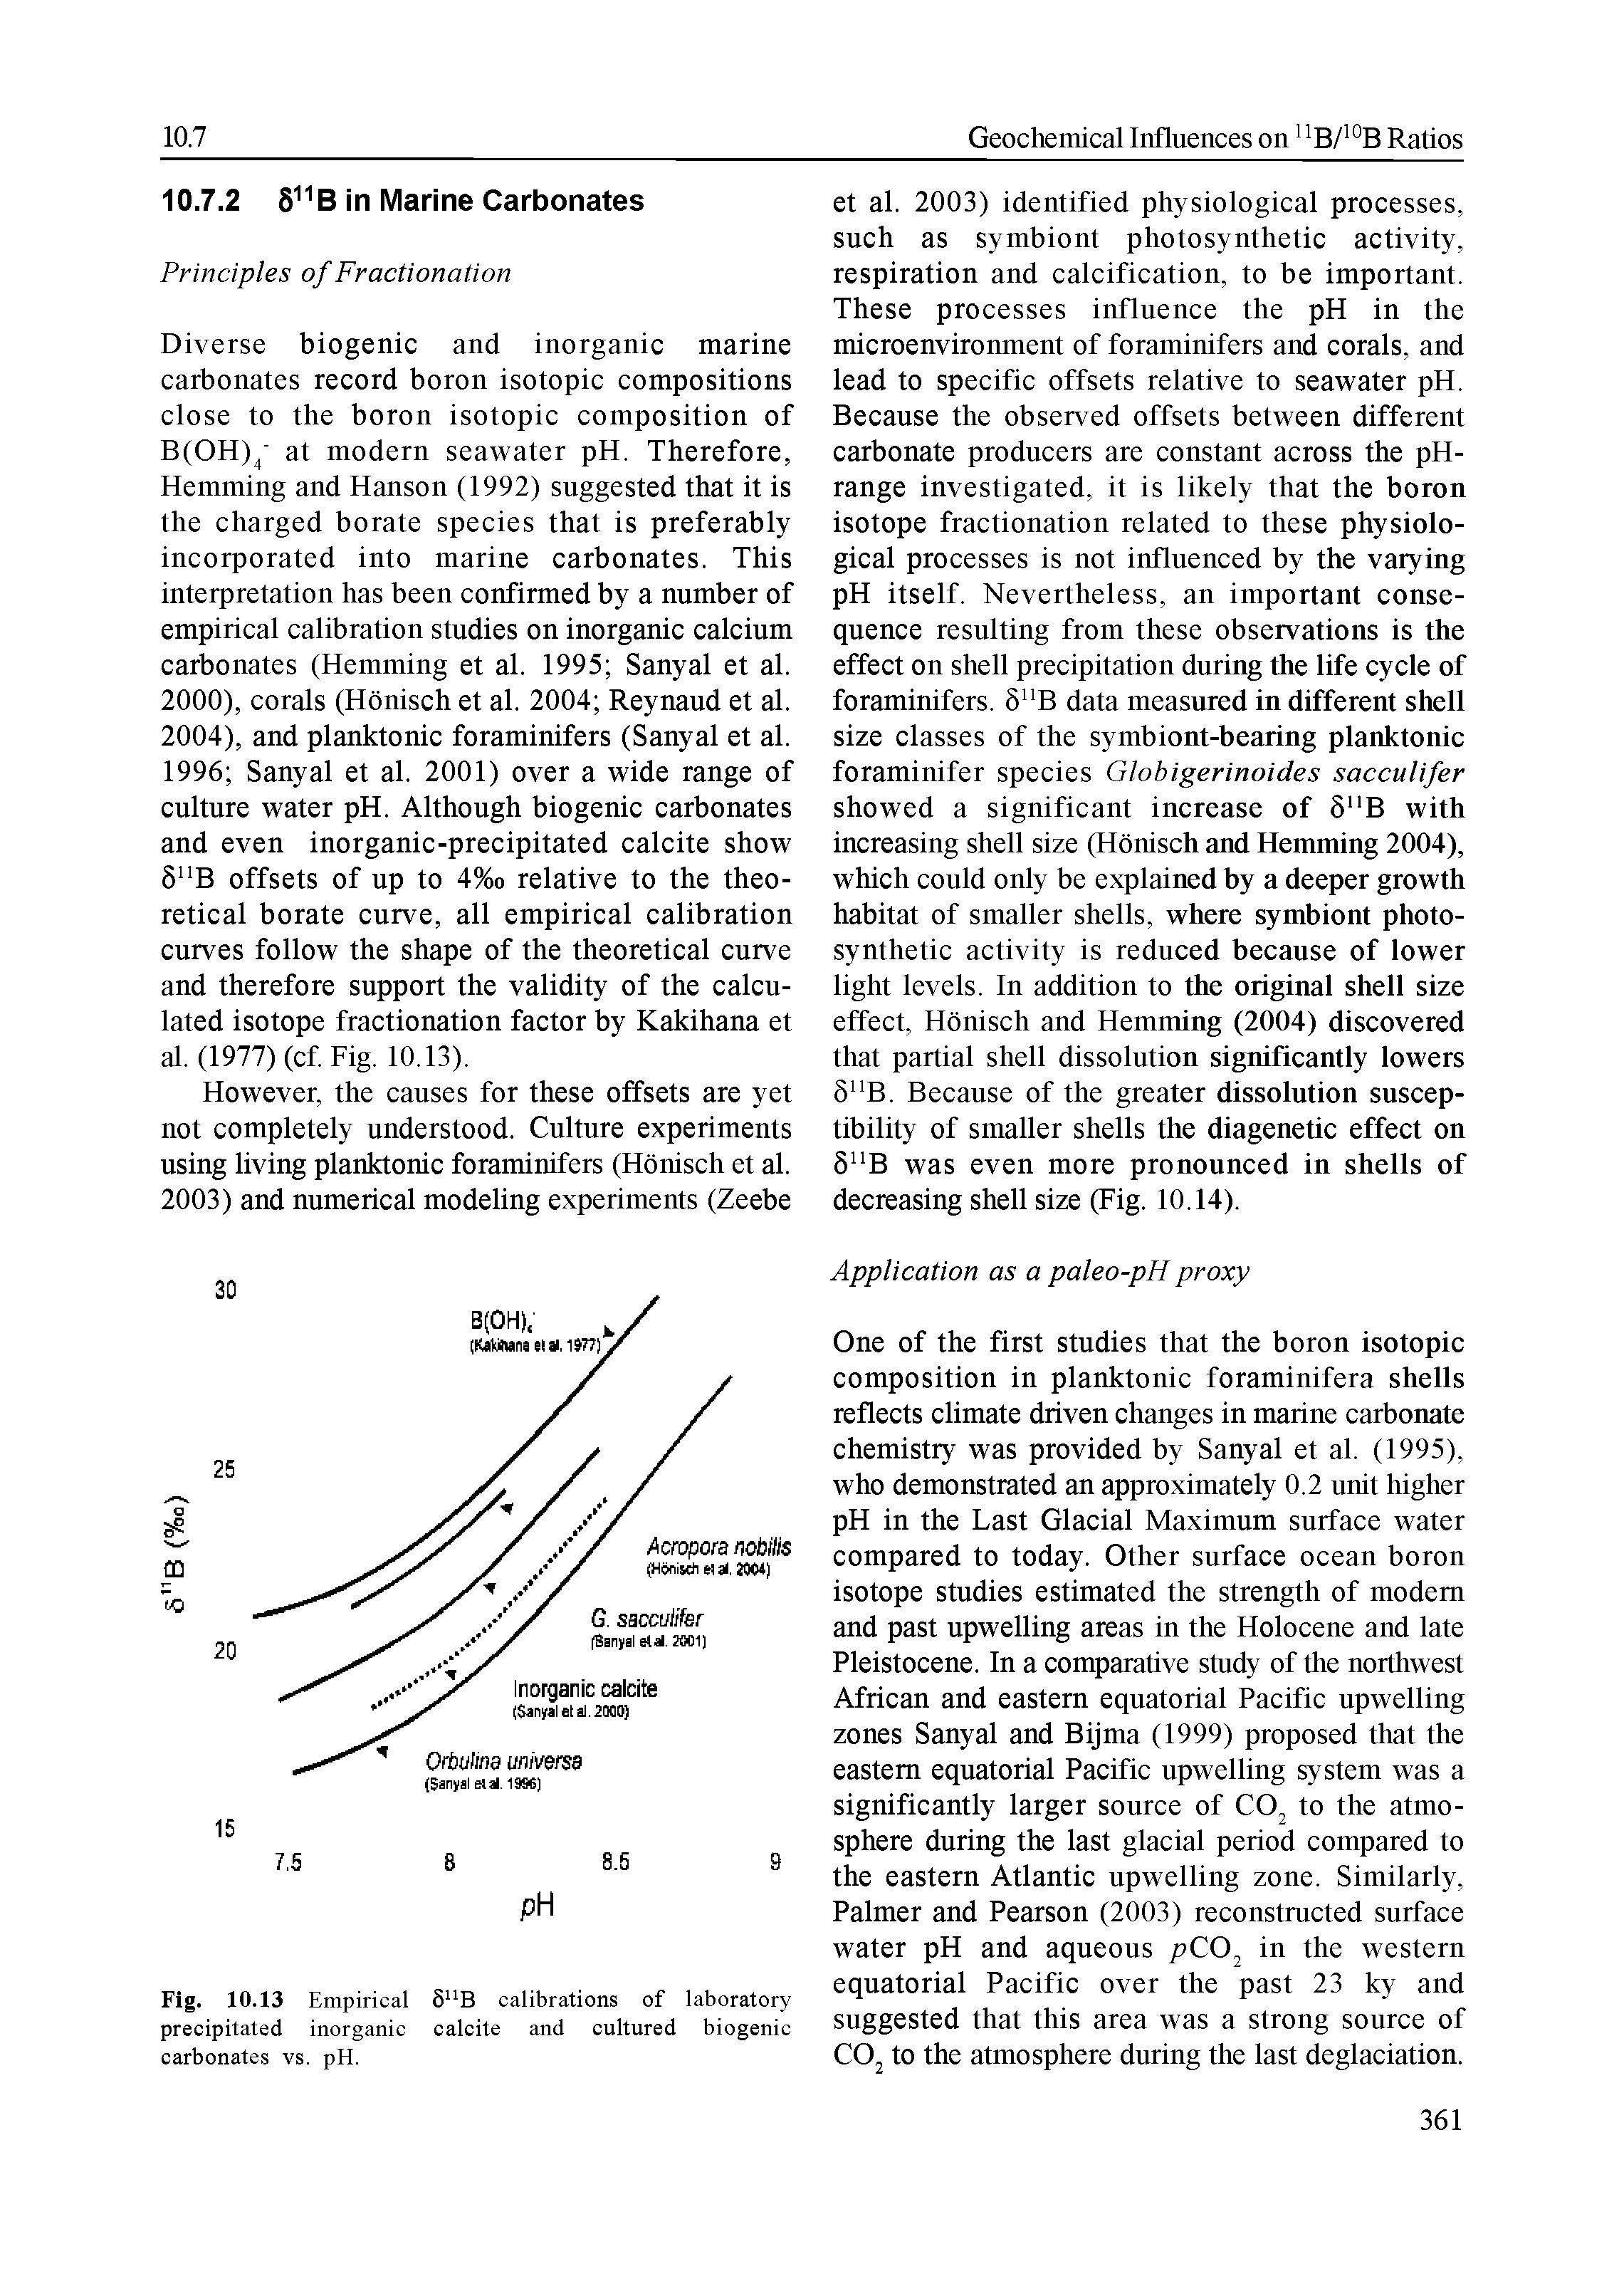 Fig. 10.13 Empirical 5 B calibrations of laboratory precipitated inorganic calcite and cultured biogenic carbonates vs. pH.